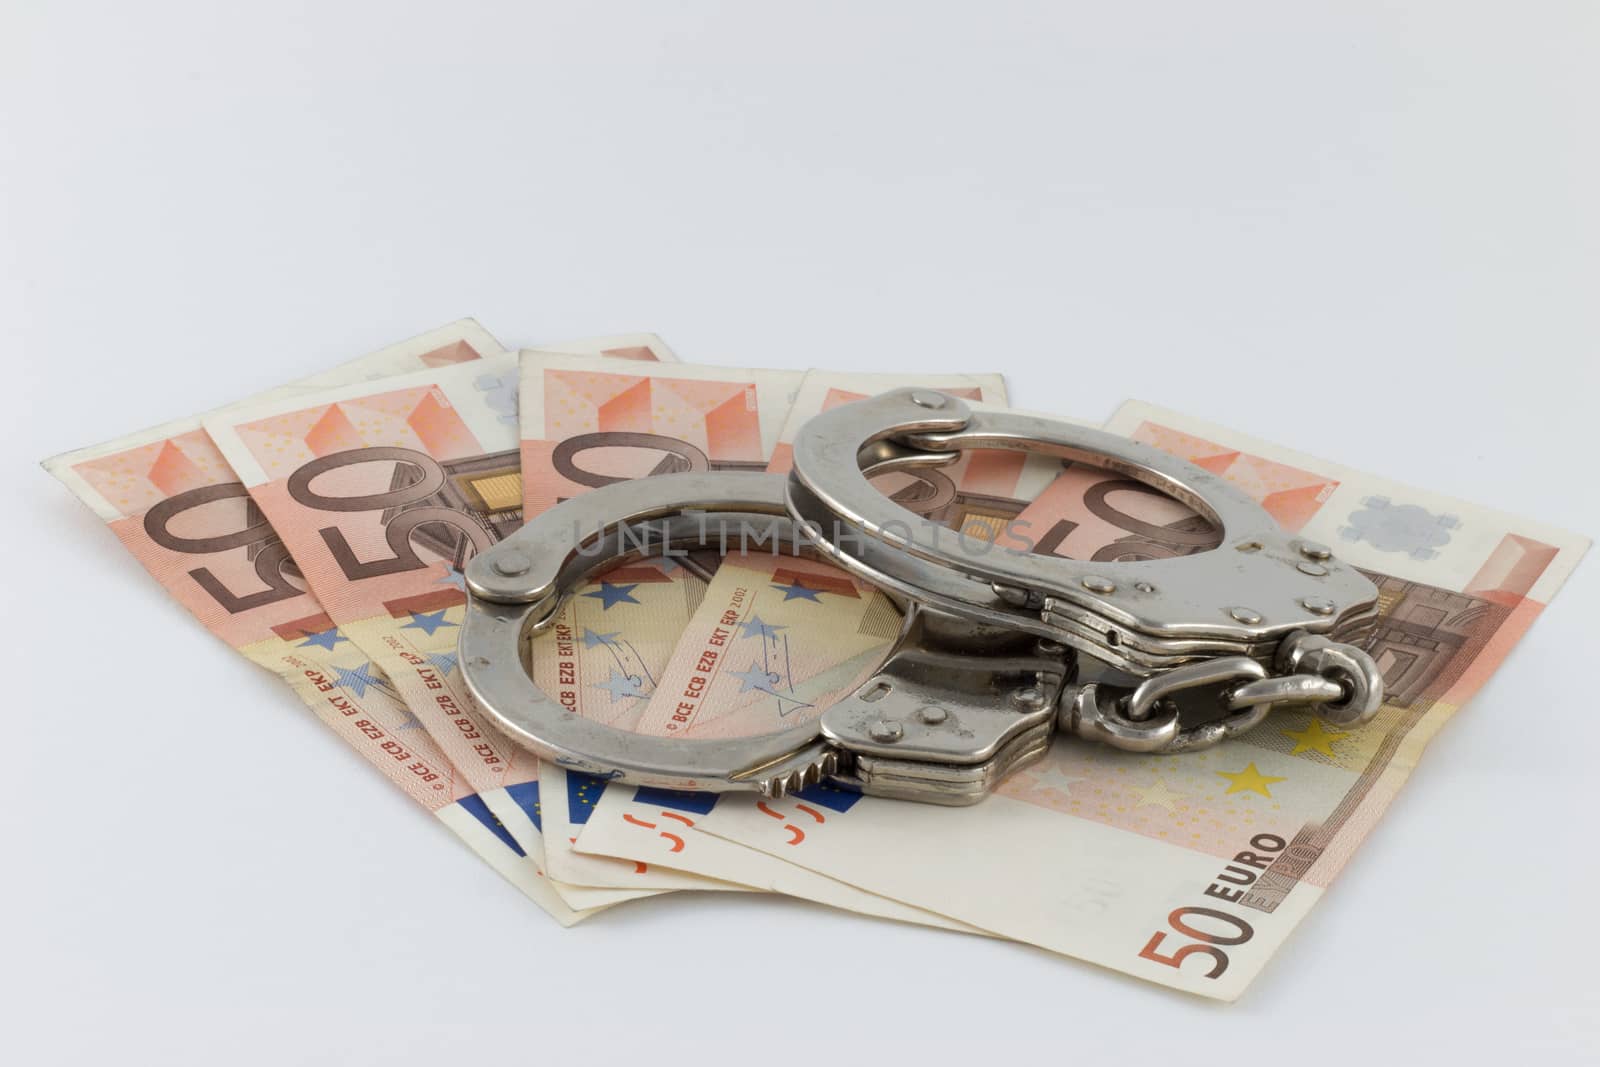 Economic crime, Handcuffs on money bills by MarkDw